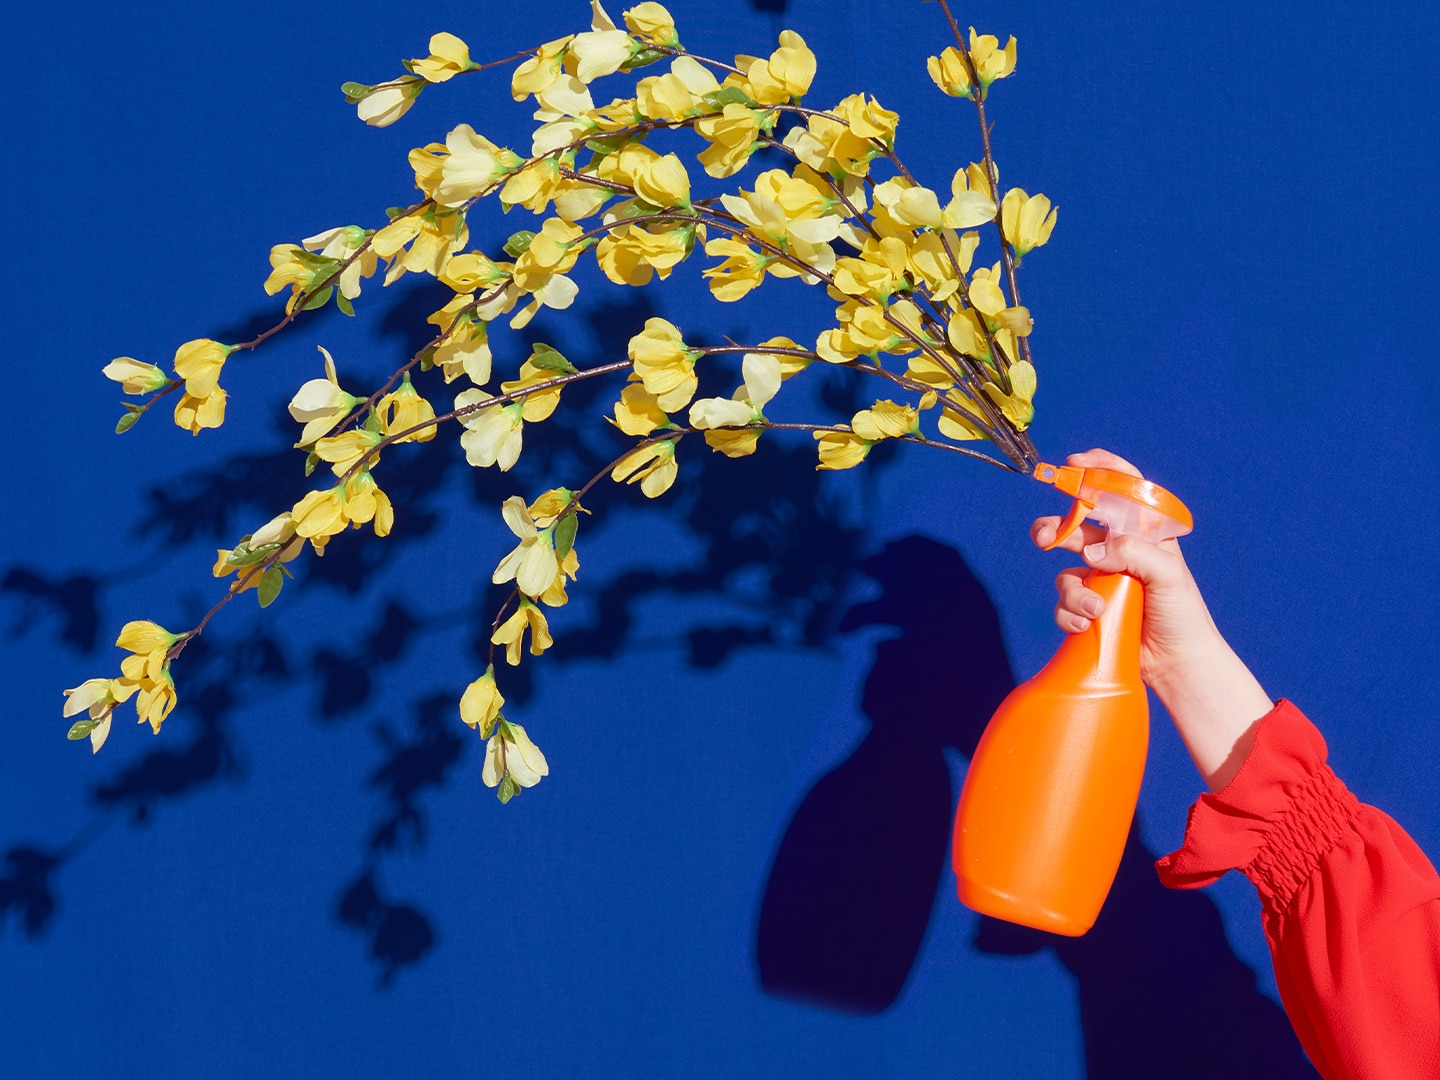 Orange bottle spraying flowers against blue background